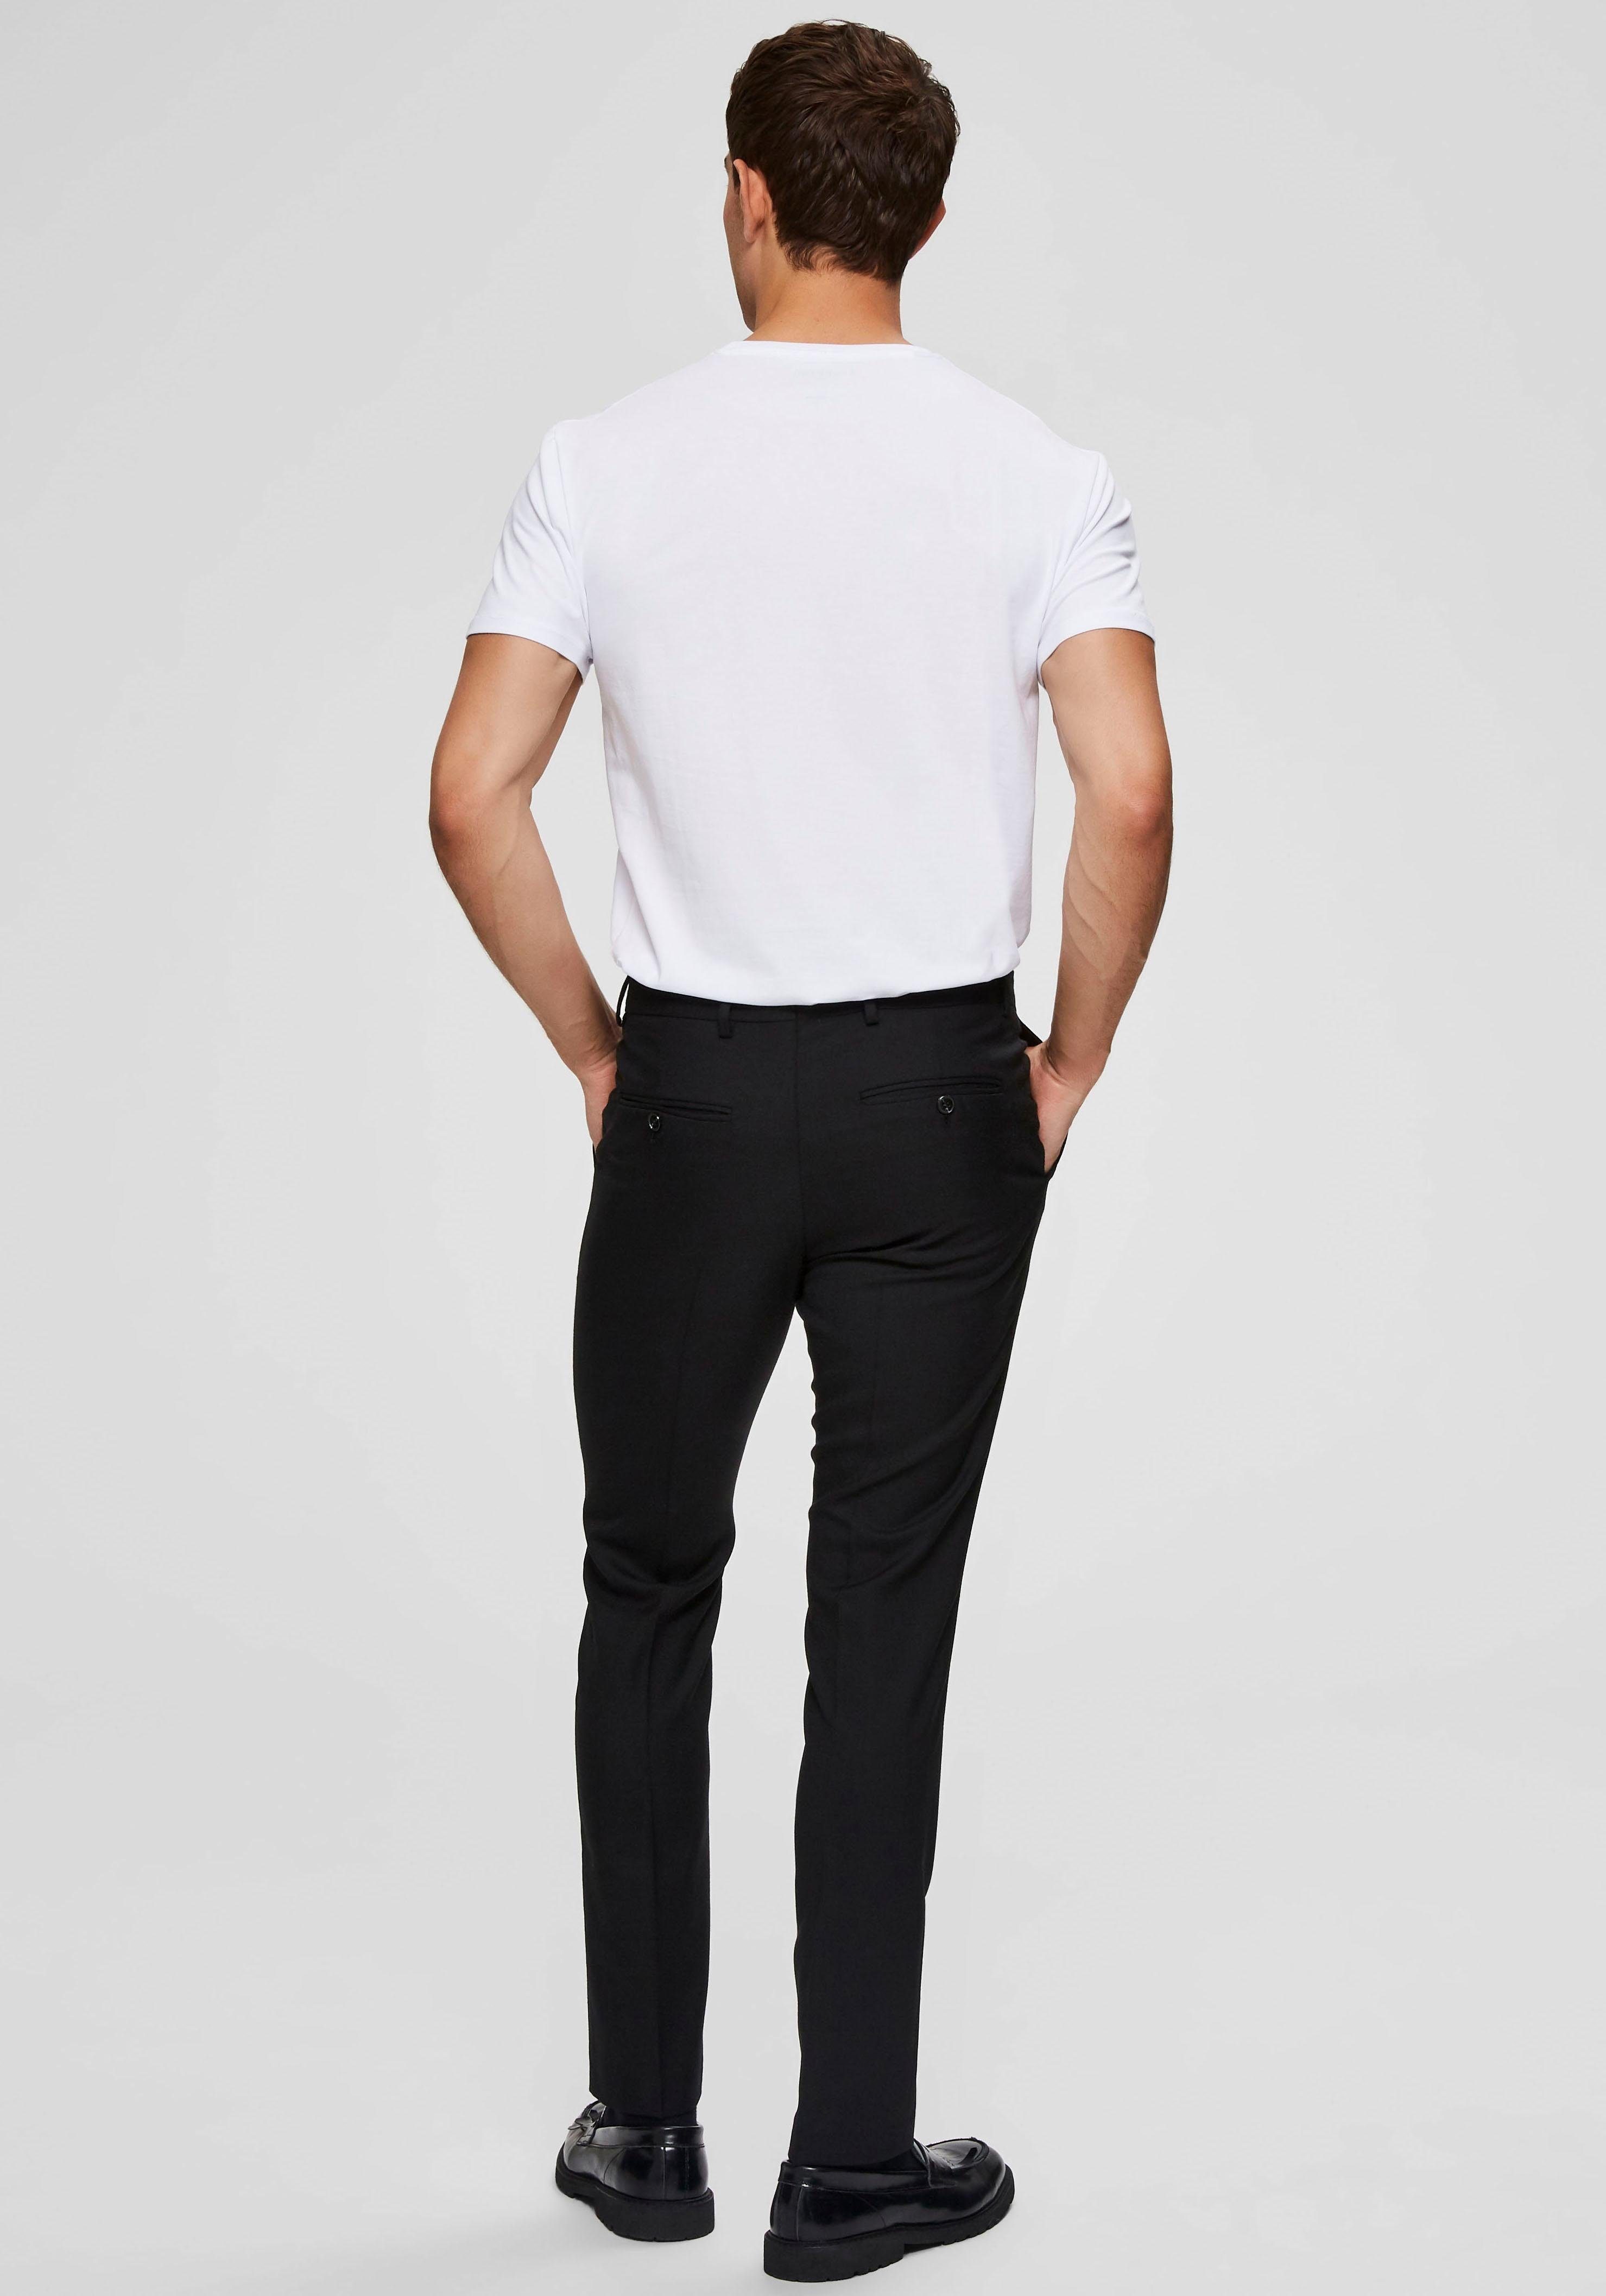 Bright T-Shirt Basic SELECTED White Rundhalsshirt HOMME